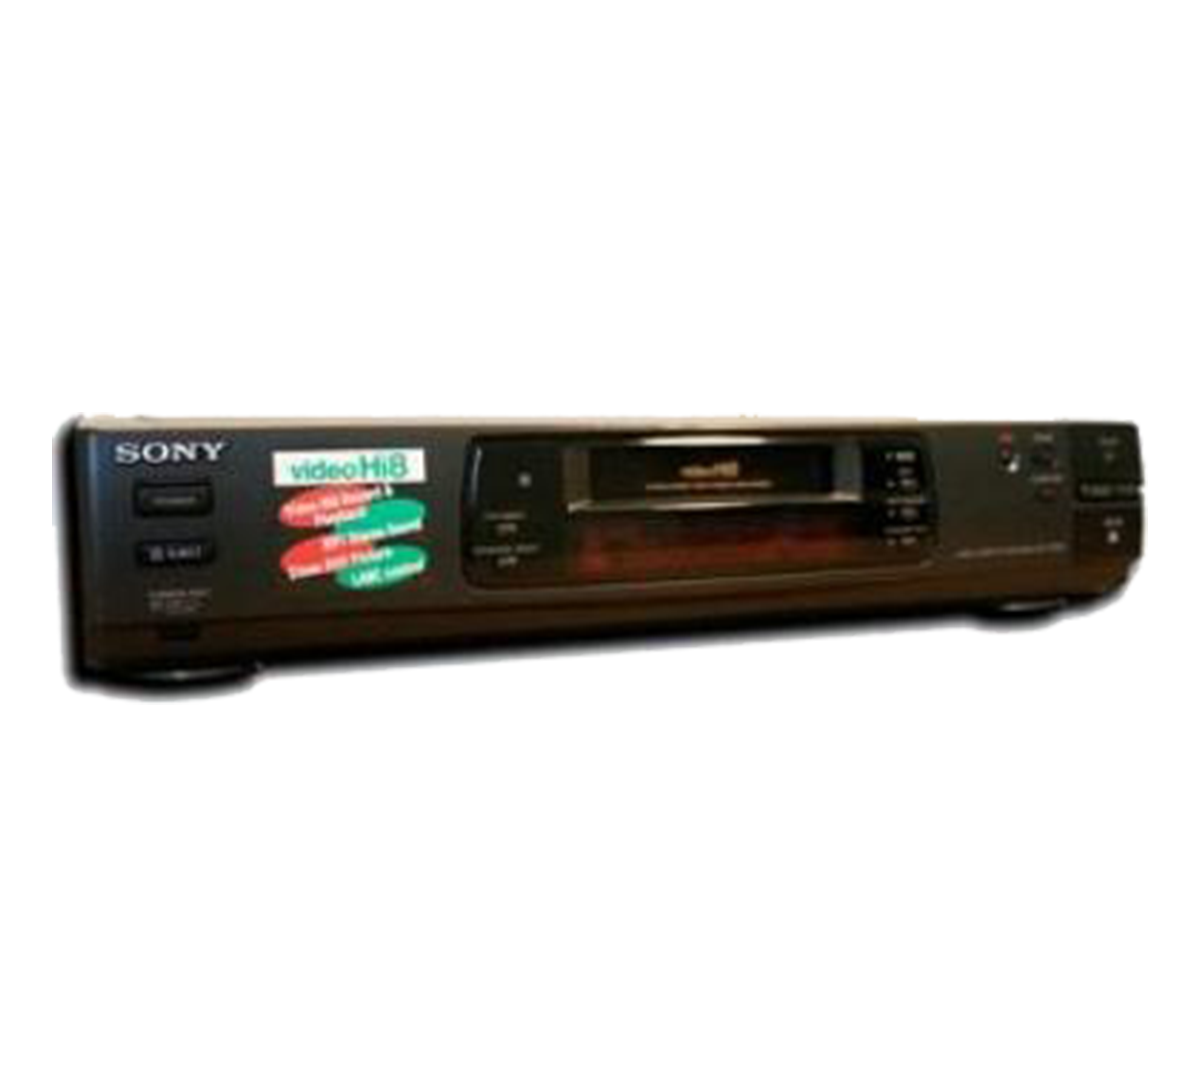 Sony Hi8 VCR - Sony EV-C200 – Southern Advantage Company